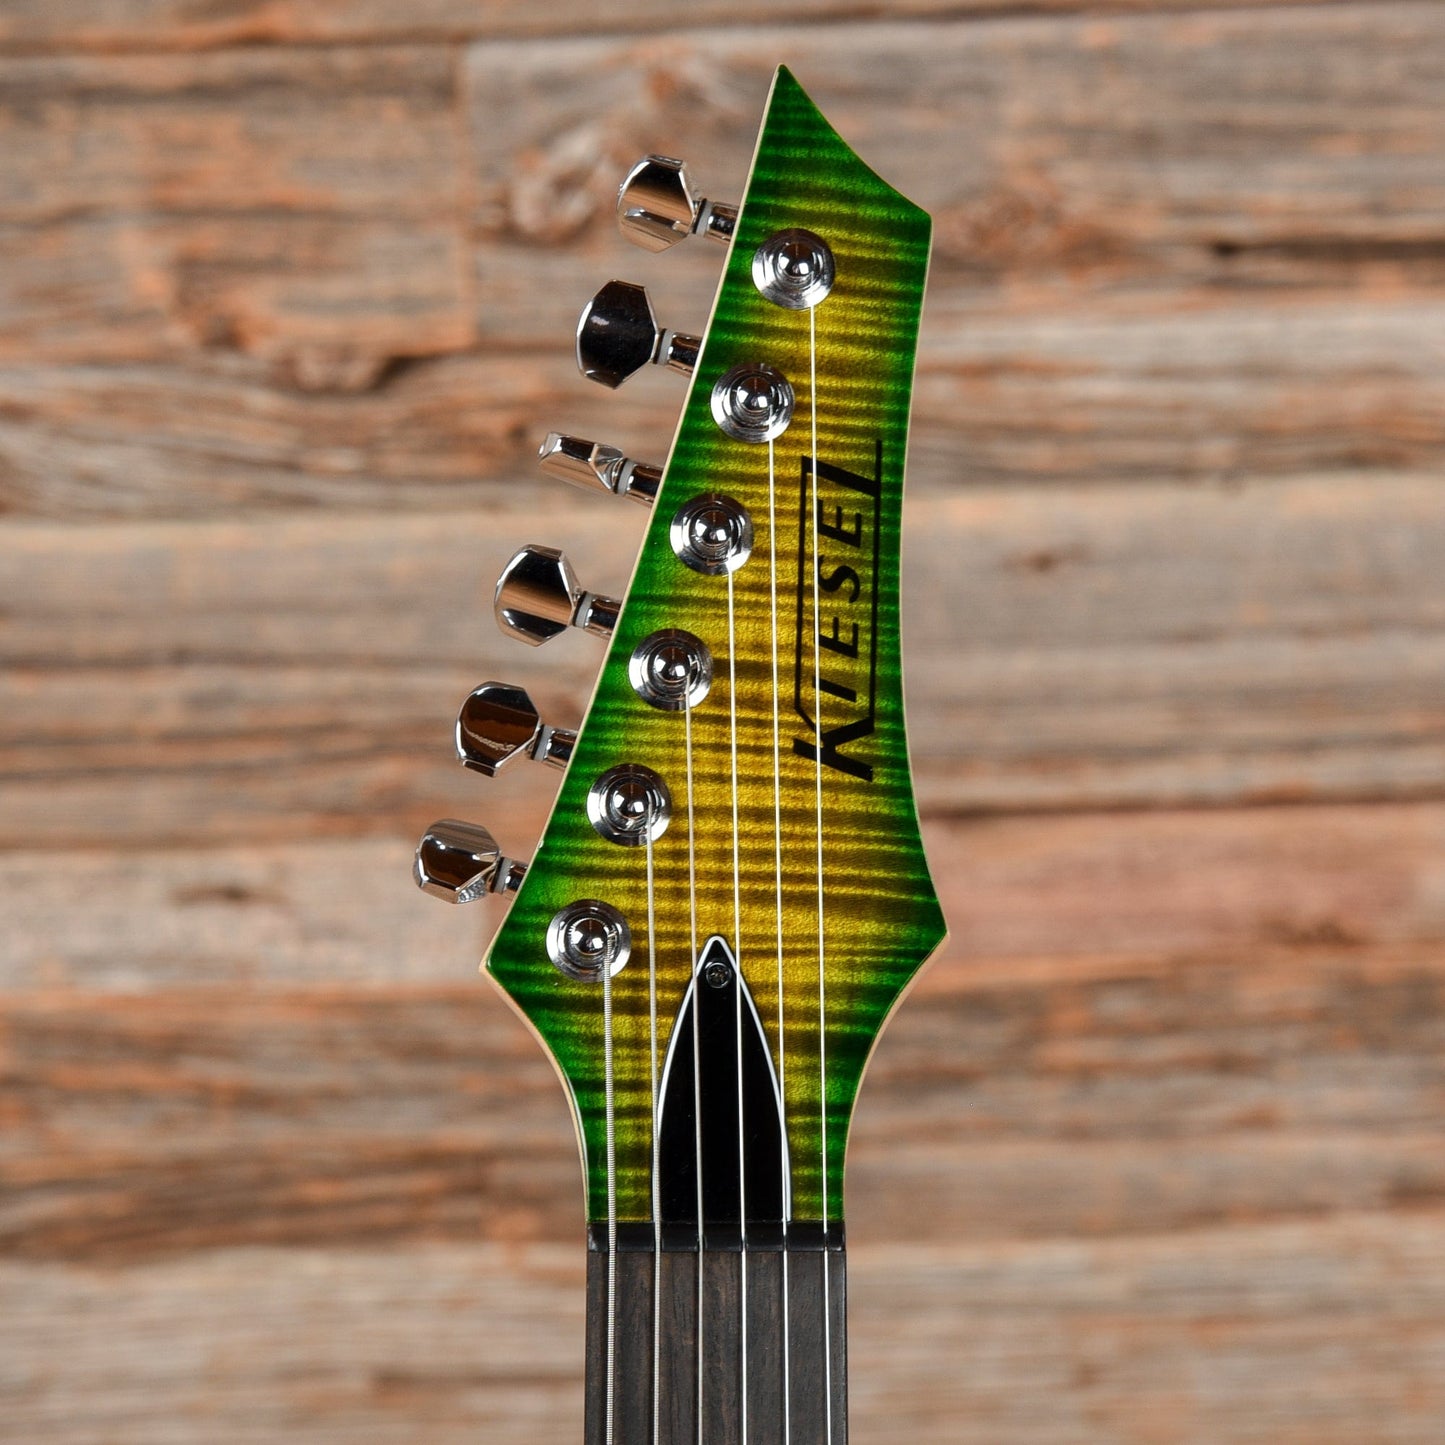 Kiesel Aries Green Burst Electric Guitars / Solid Body